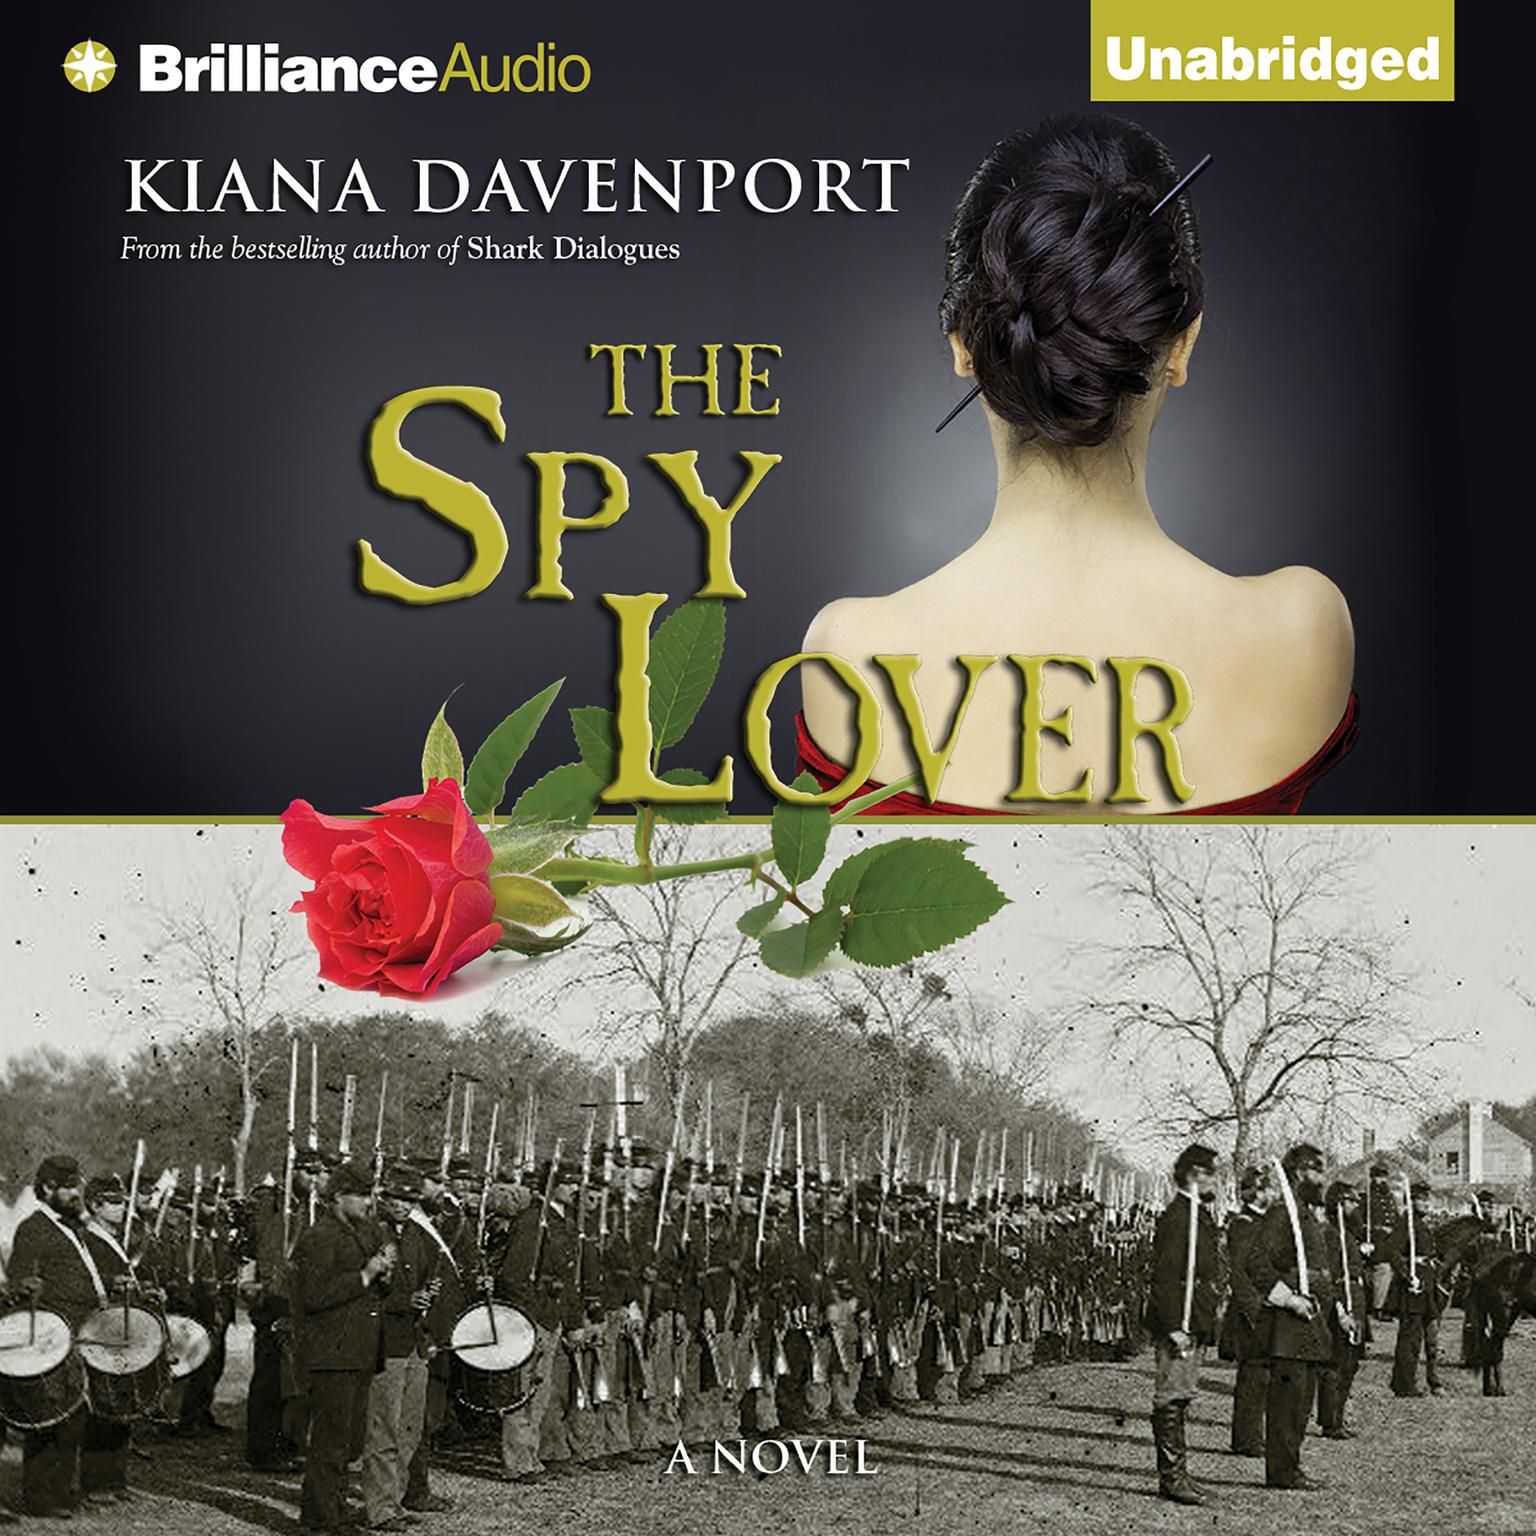 The Spy Lover: A Novel Audiobook, by Kiana Davenport